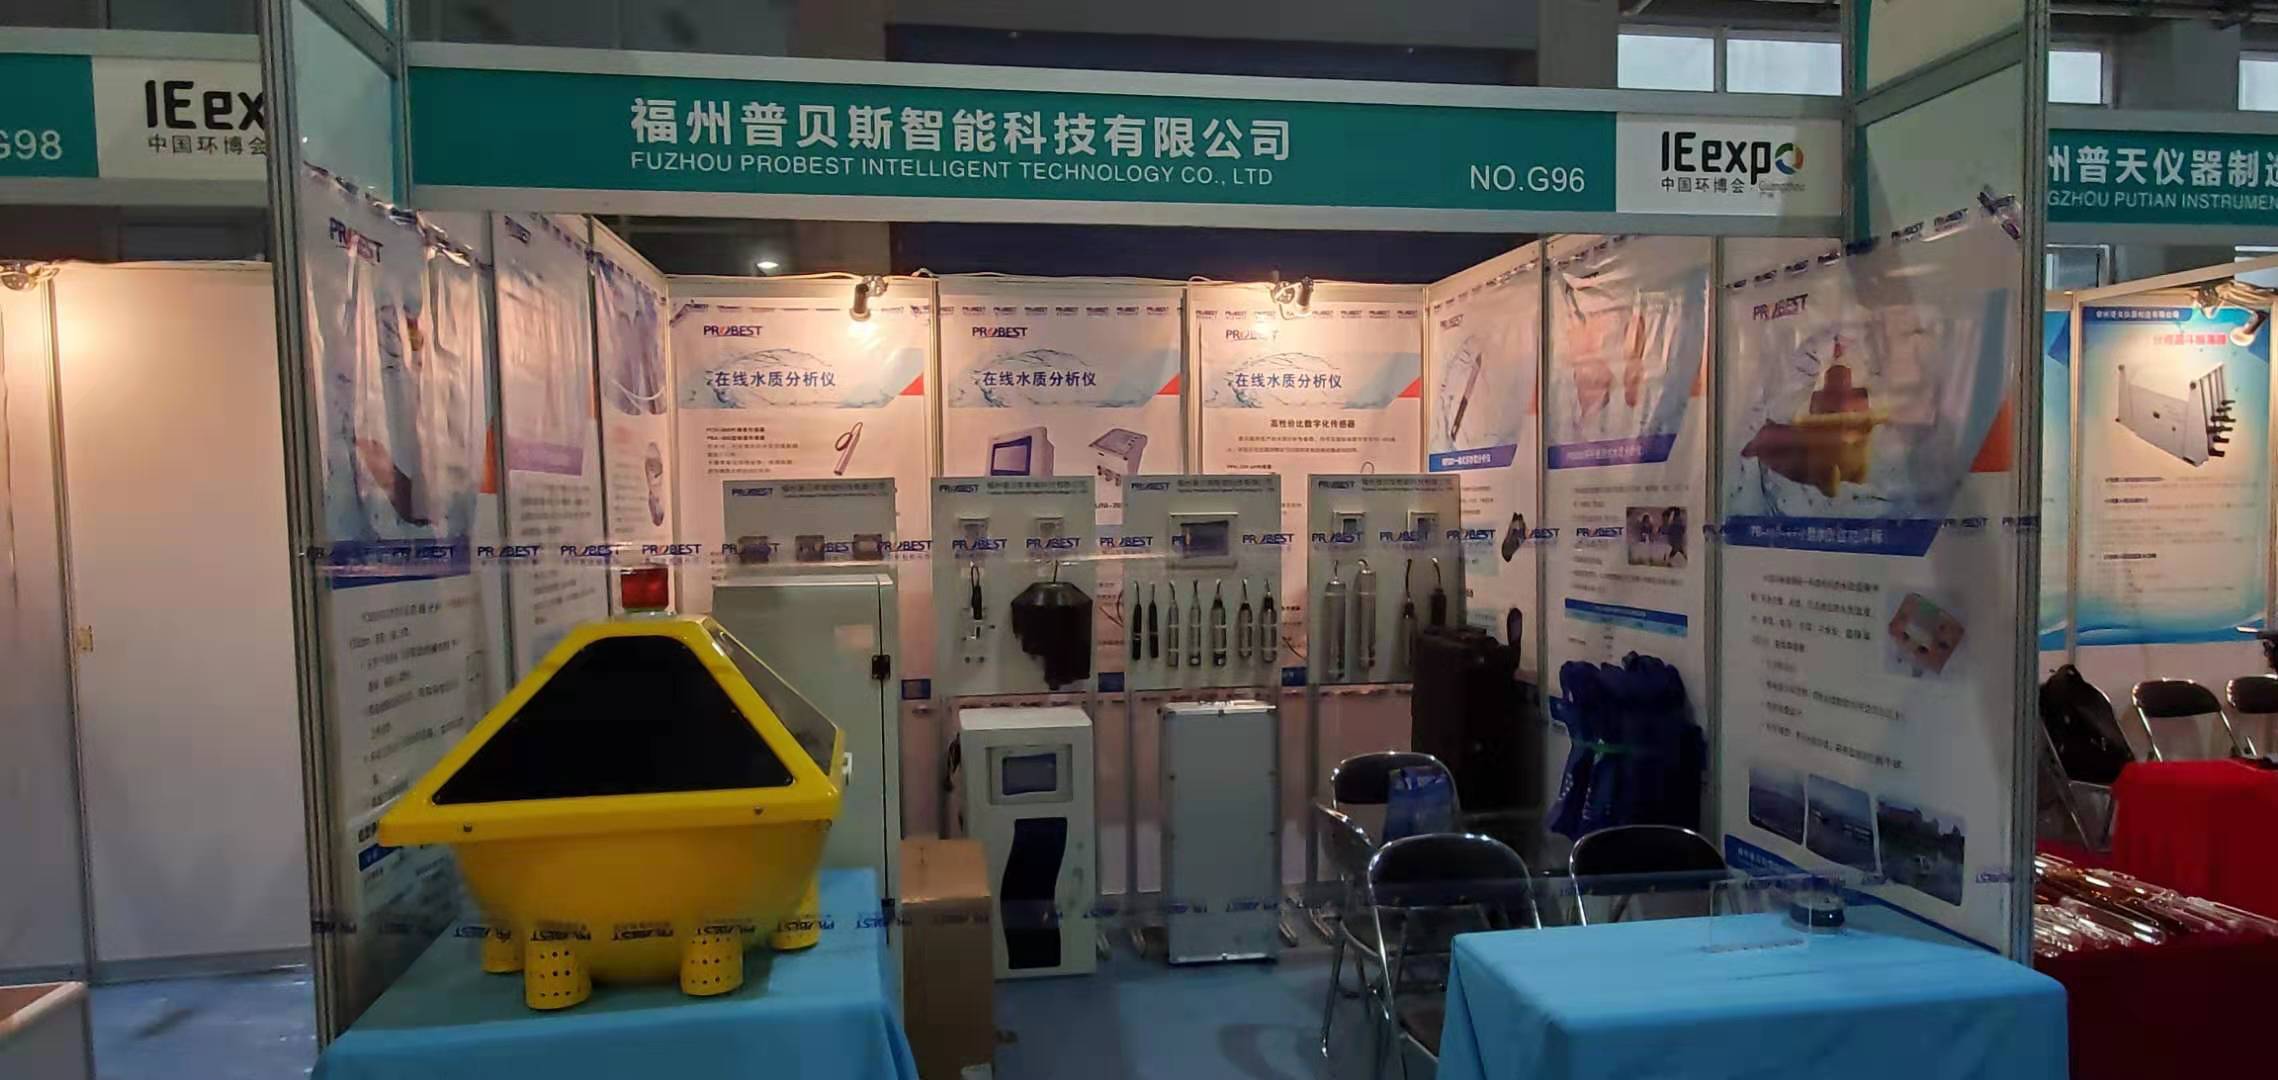 Fuzhou Probest participates in IE expo 2019